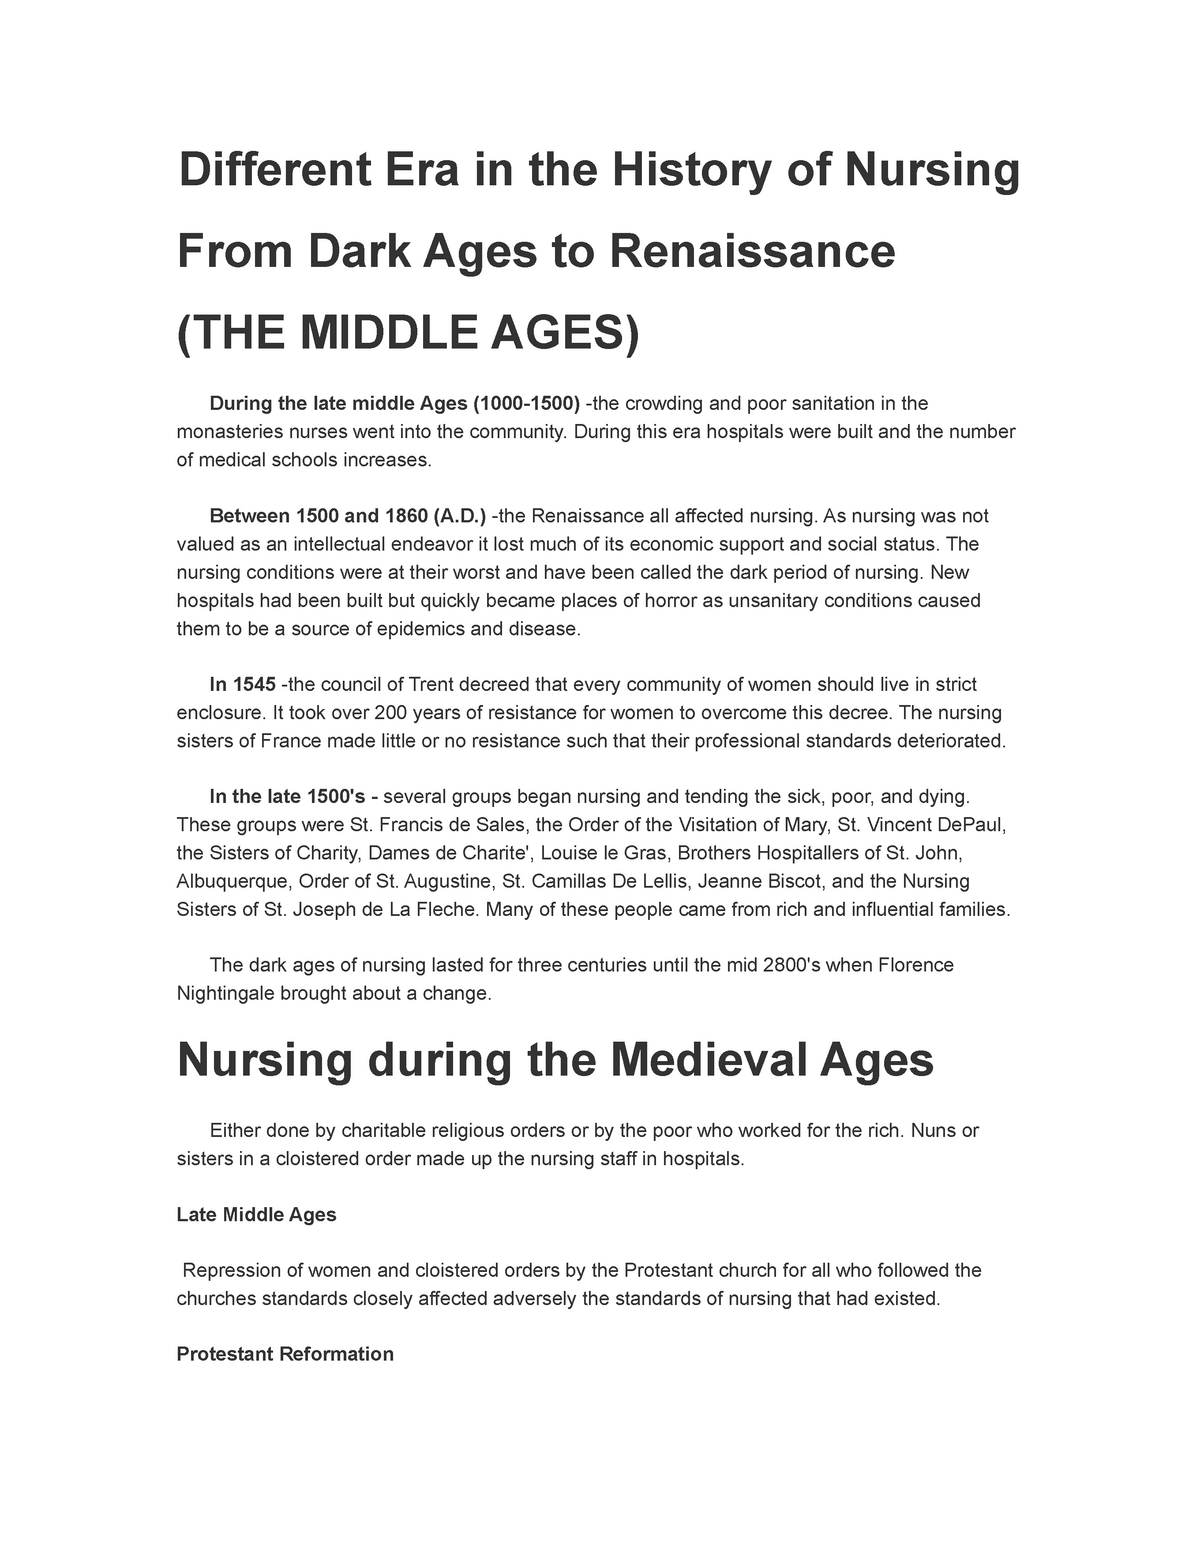 dark ages of nursing